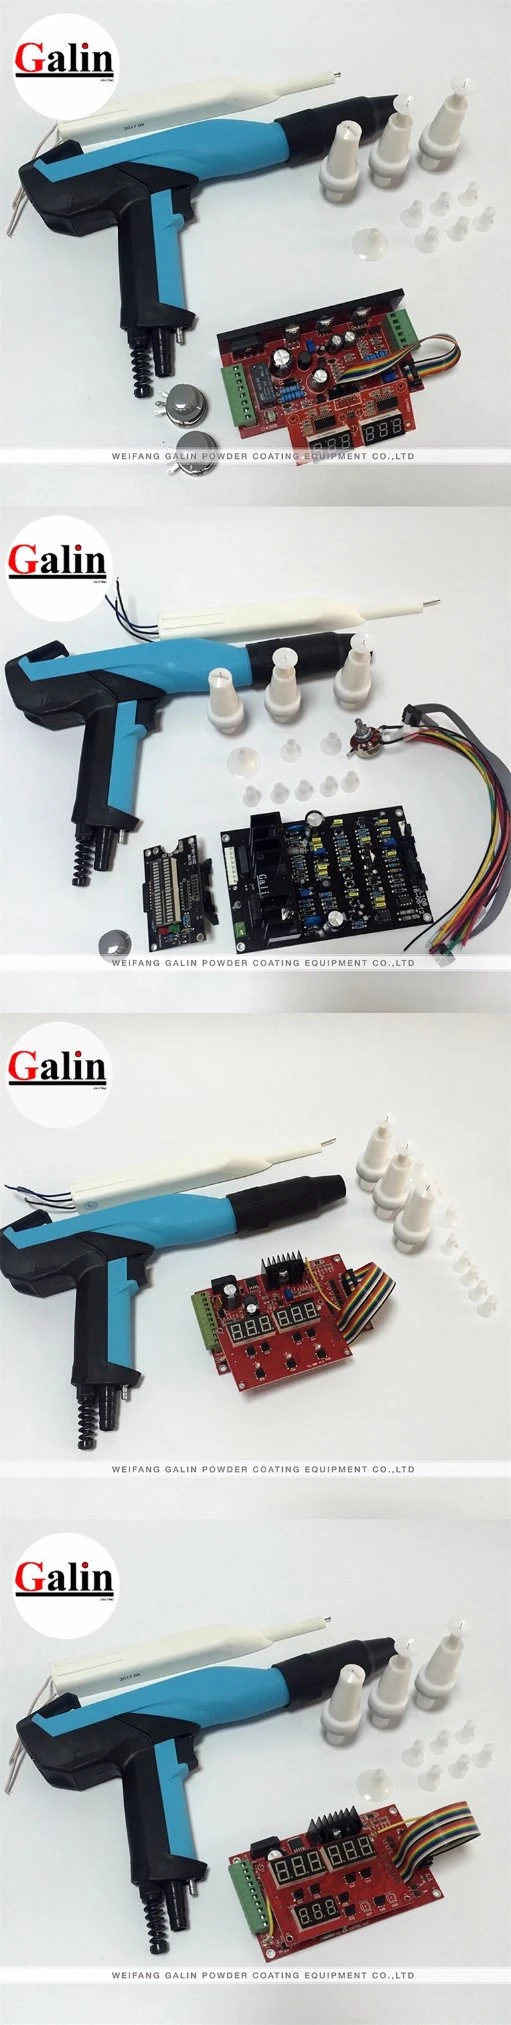 Galin Powder Spray/Paint/Coating Gun (GLQ-L-1BL) with Cascade and Diffrent PCB